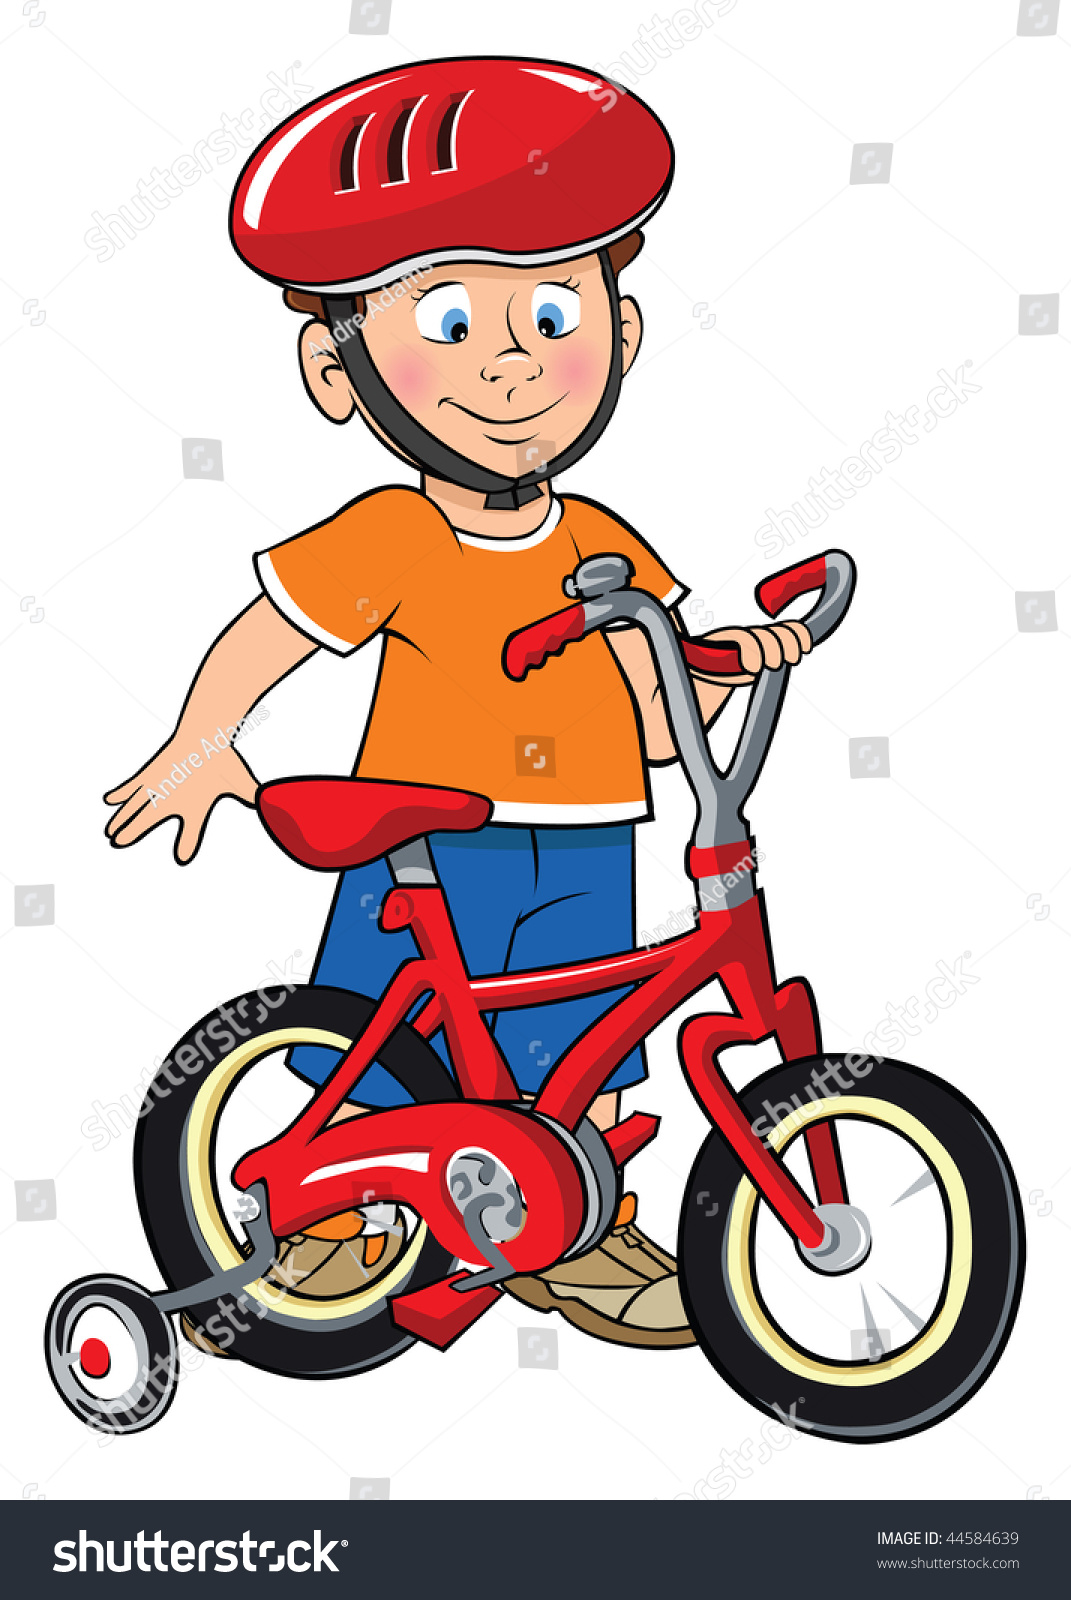 clipart boy on bike - photo #20